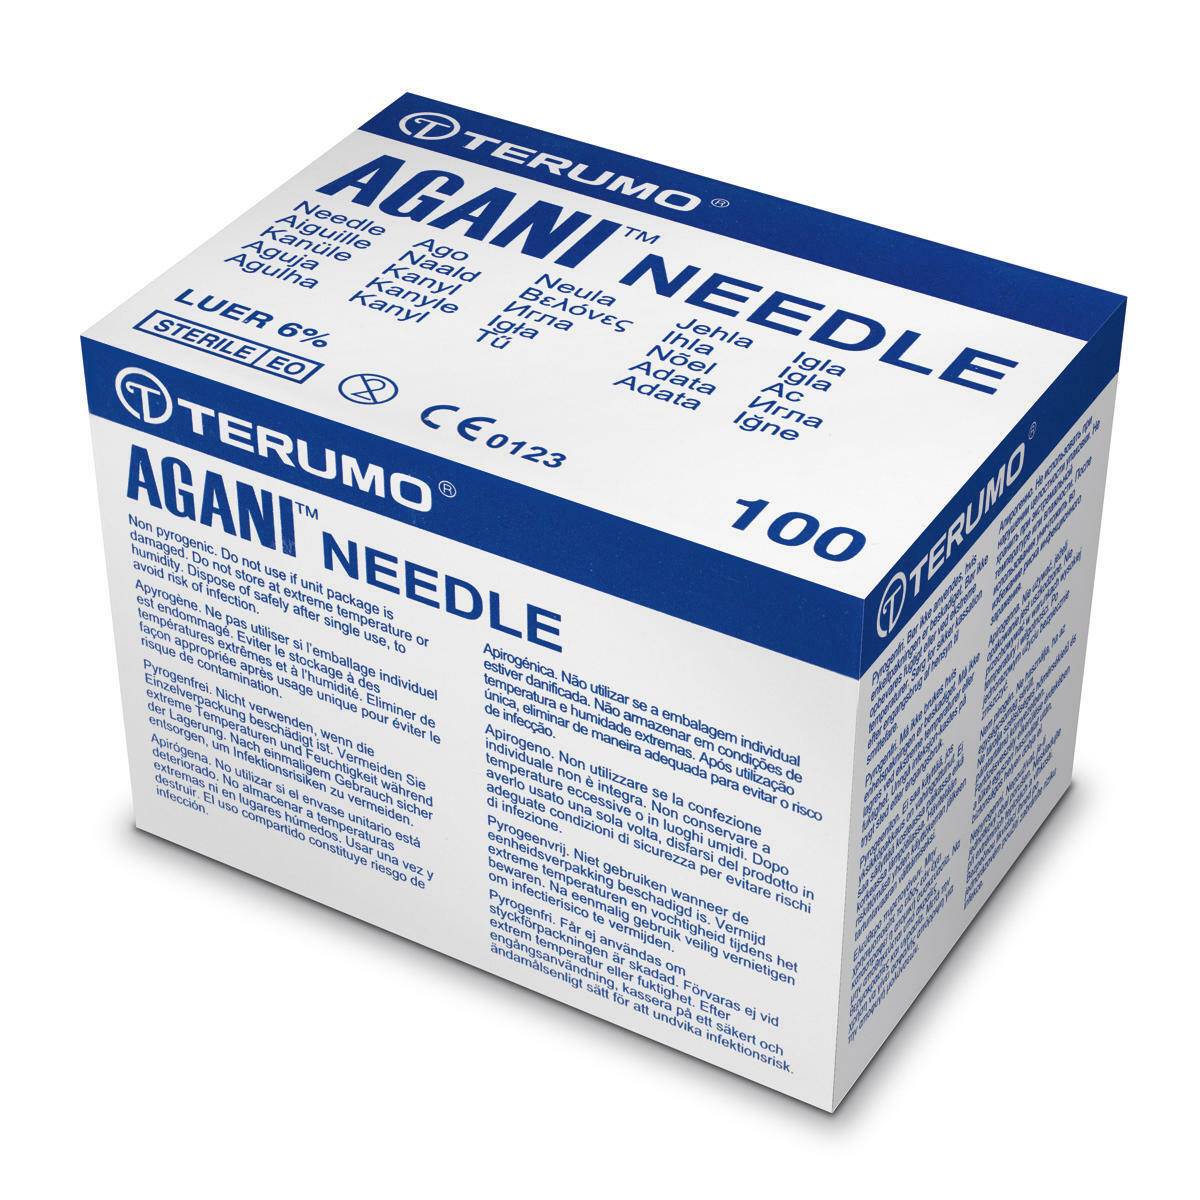 19g Cream 2 inch Terumo Needles - UKMEDI